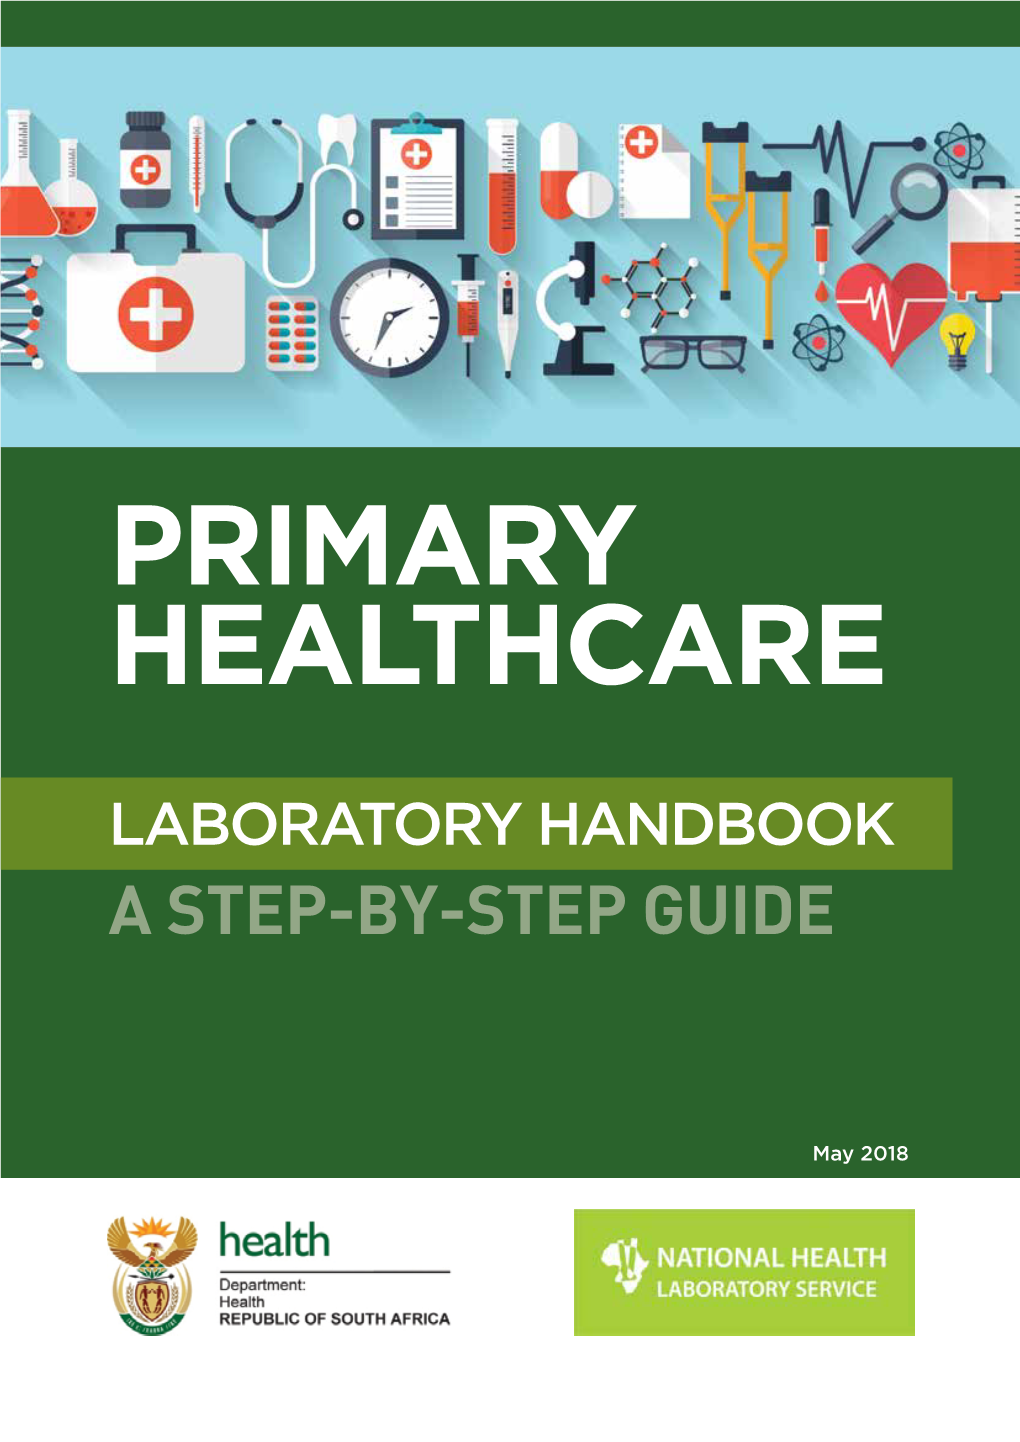 (PHC) Laboratory Handbook